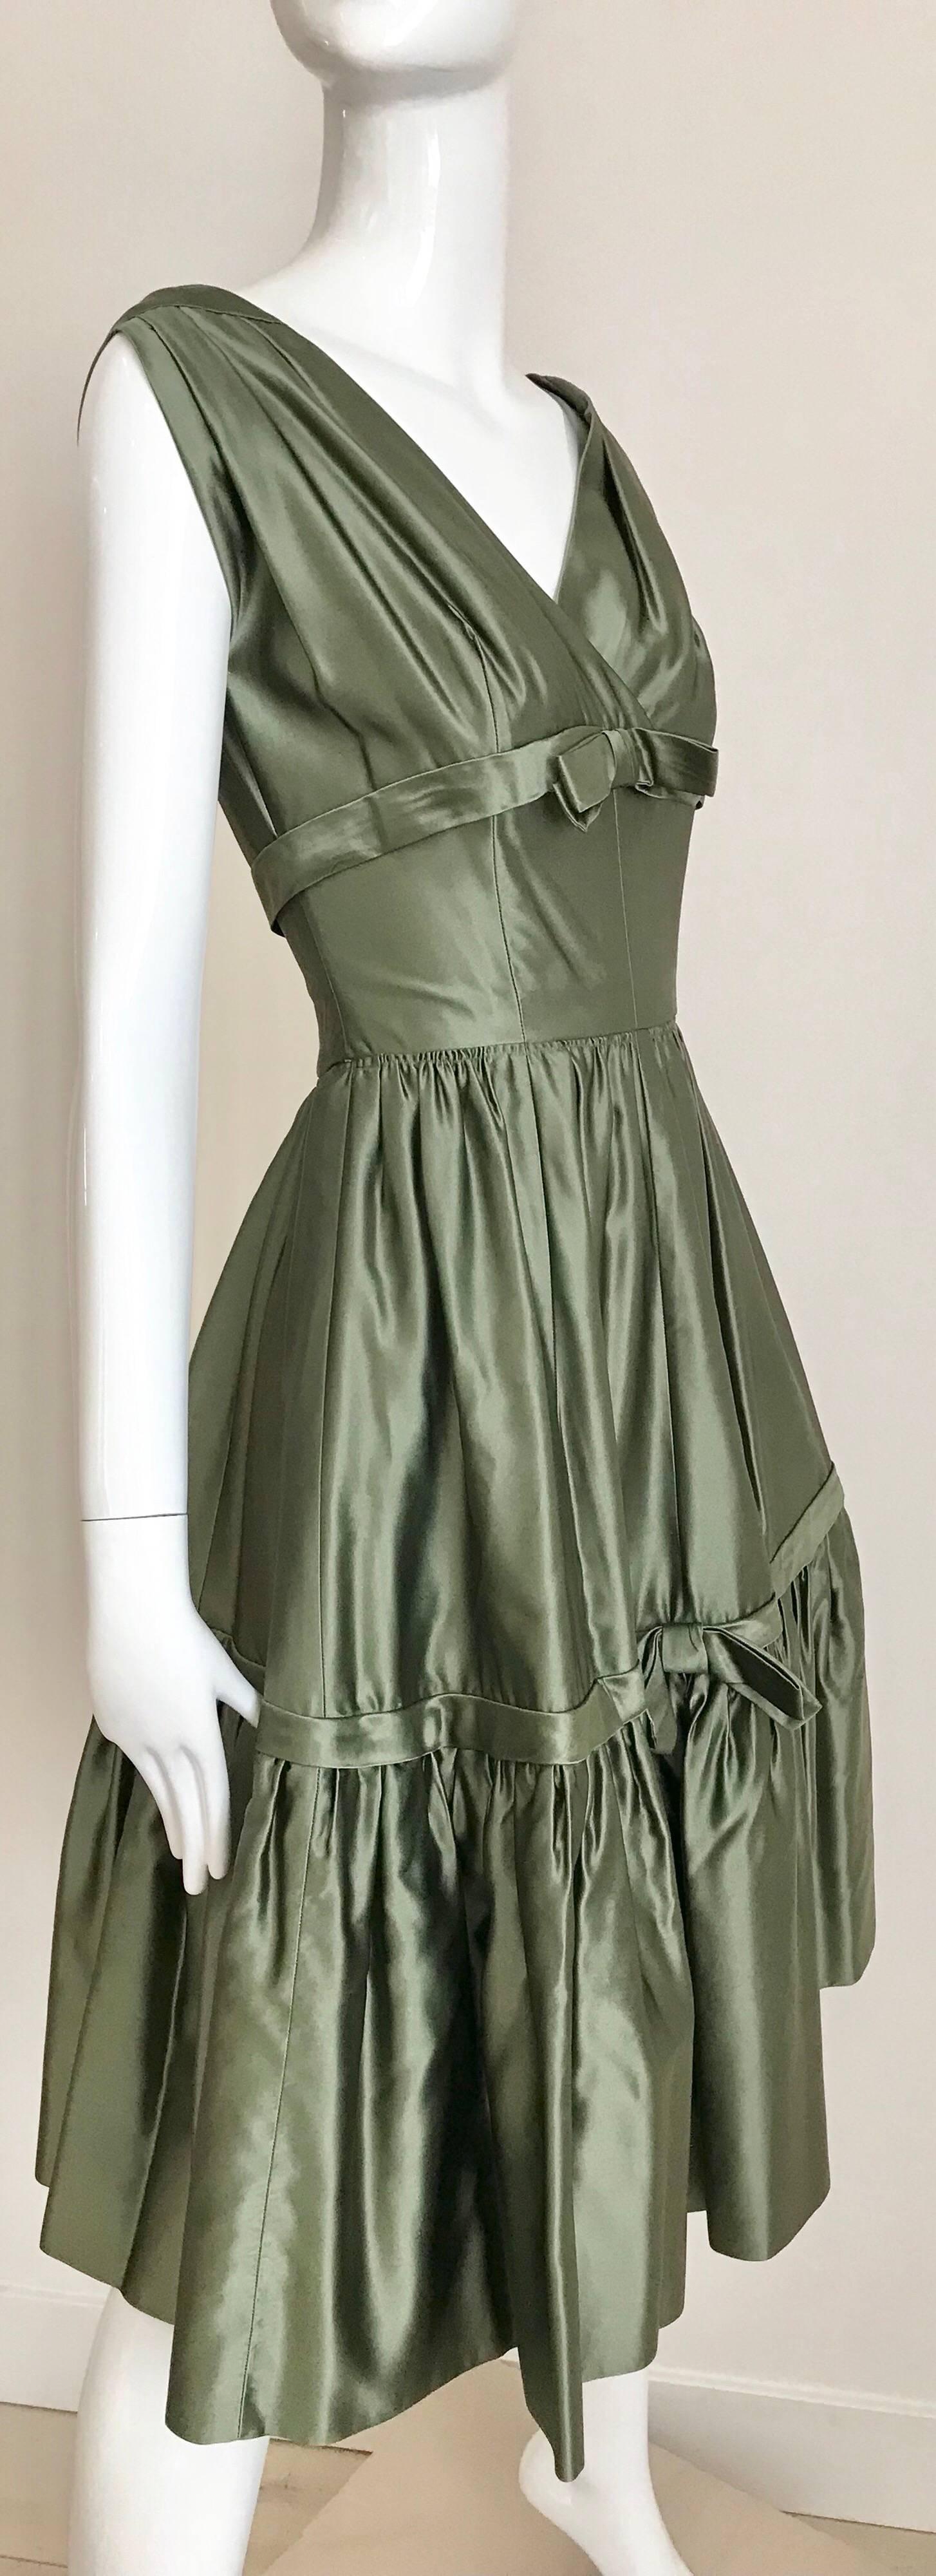 Christian Dior Green Silk Cocktail Dress, 1950s  1